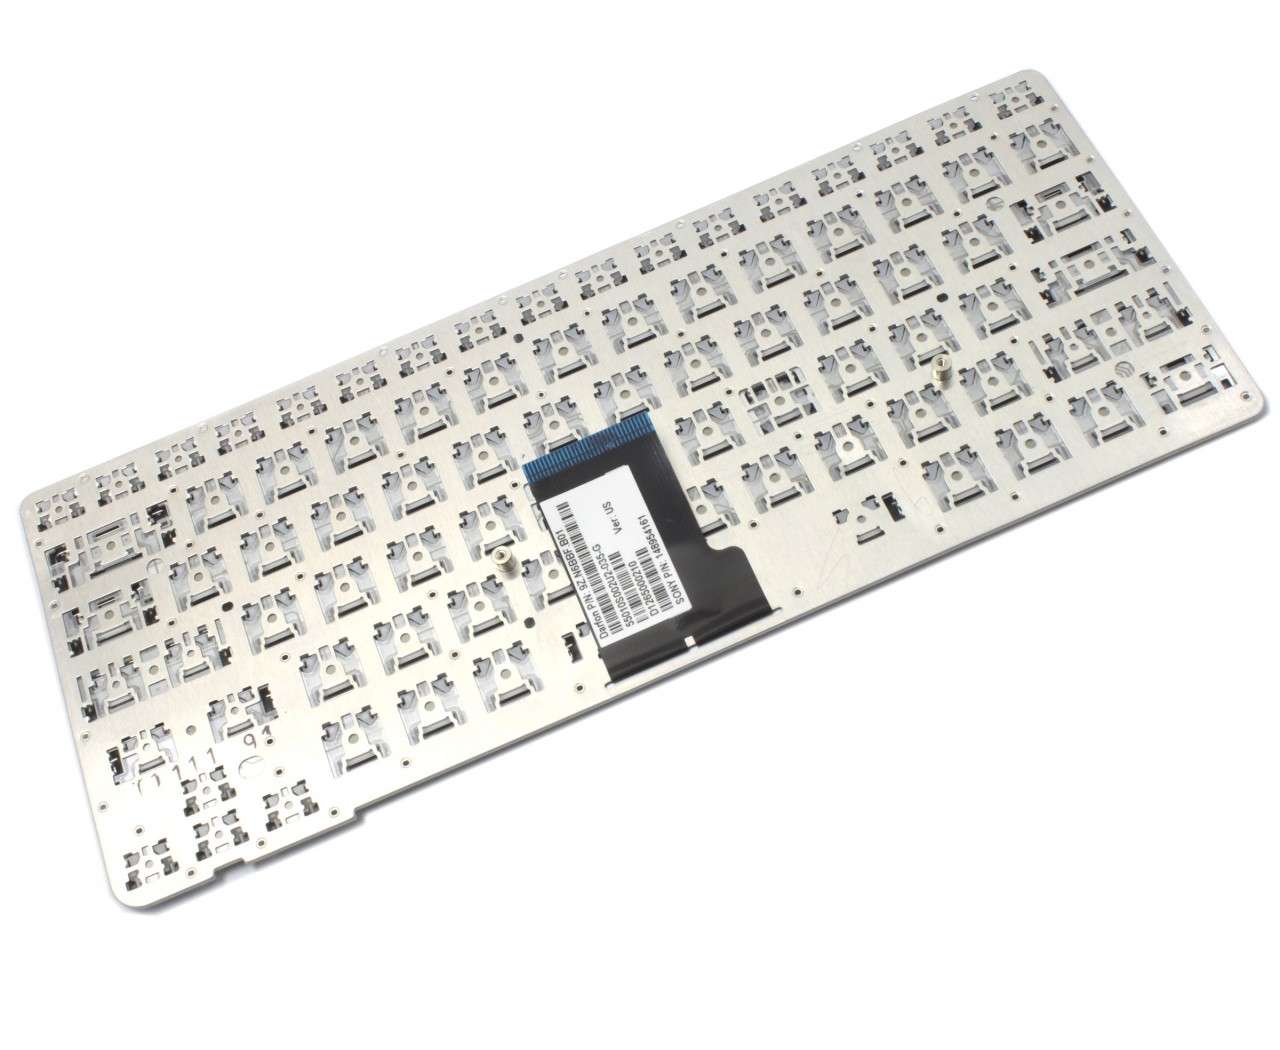 Tastatura argintie Sony Vaio VPCCA3s1e p layout US fara rama enter mic